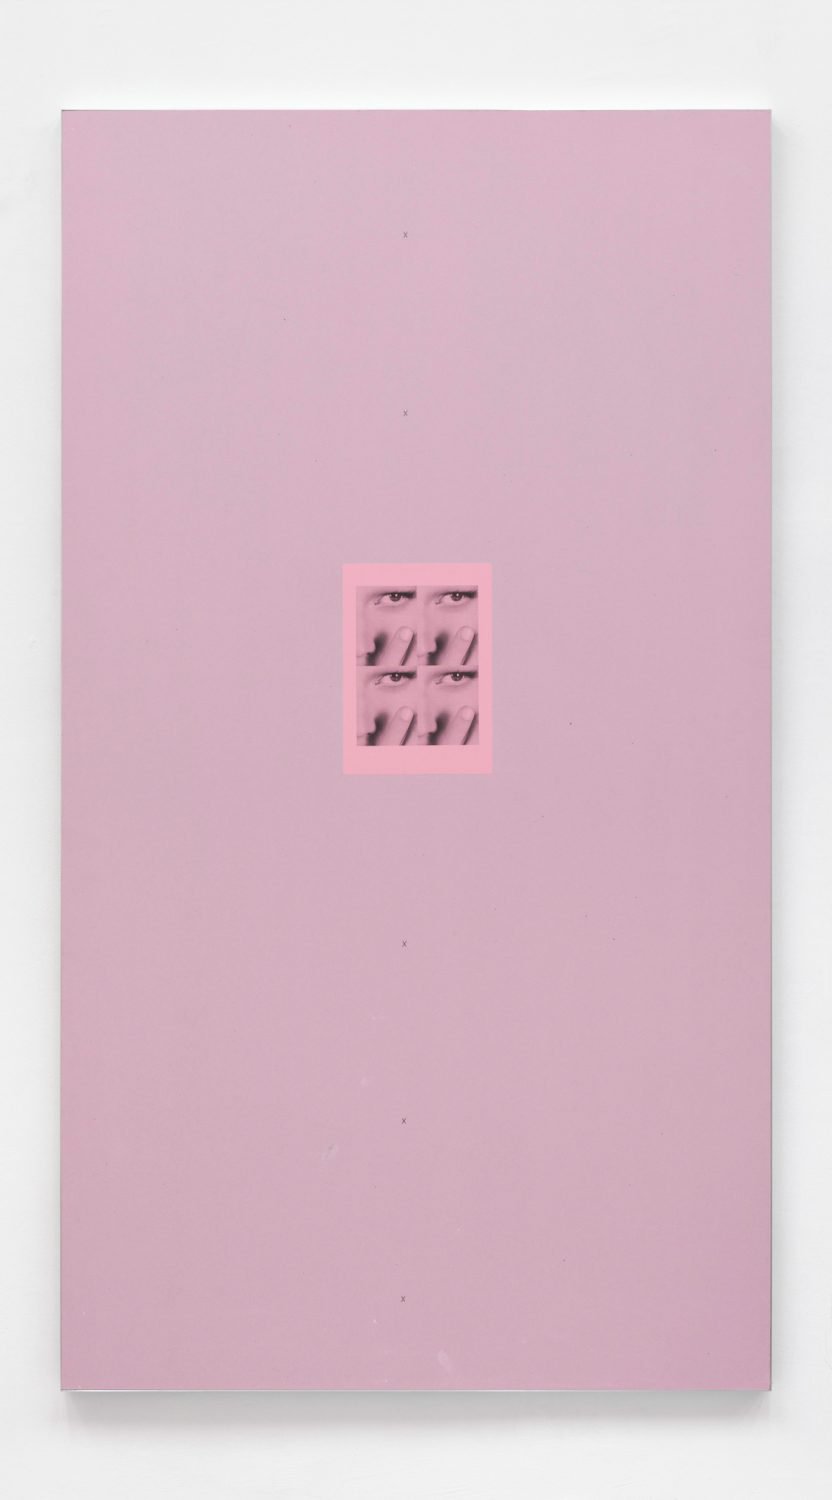 Nick OberthalerUntitled, 2015Xerox on gypsum board180 x 100 cm